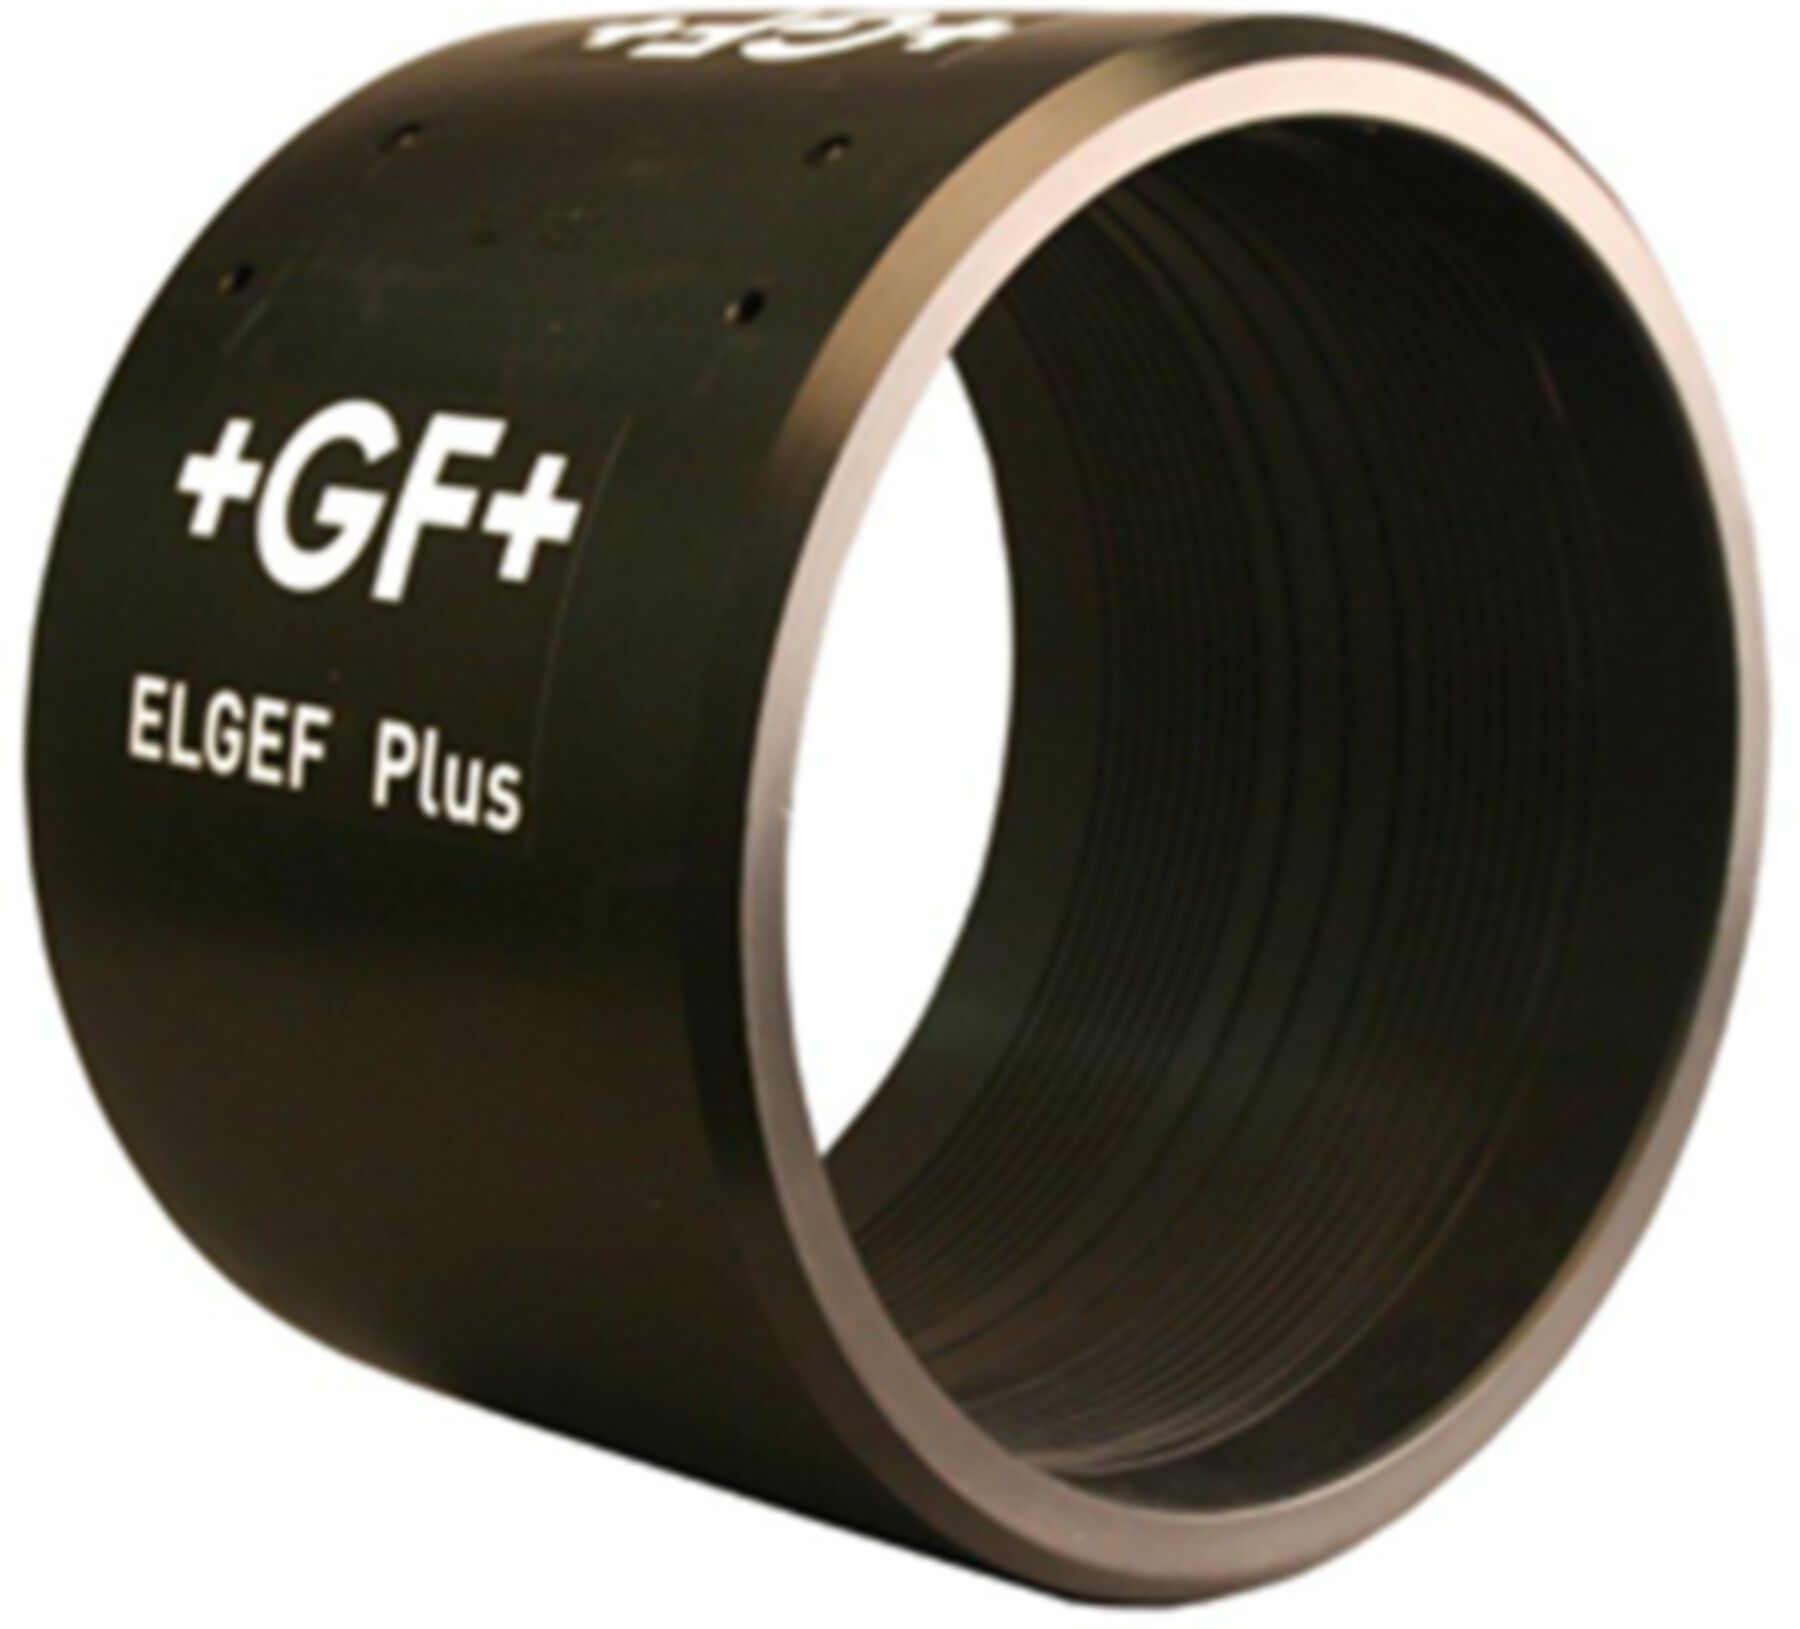 ELGEF Muffe PN 16 d 500mm 753 911 707 - ELGEF Plus Elektroschweissfittinge